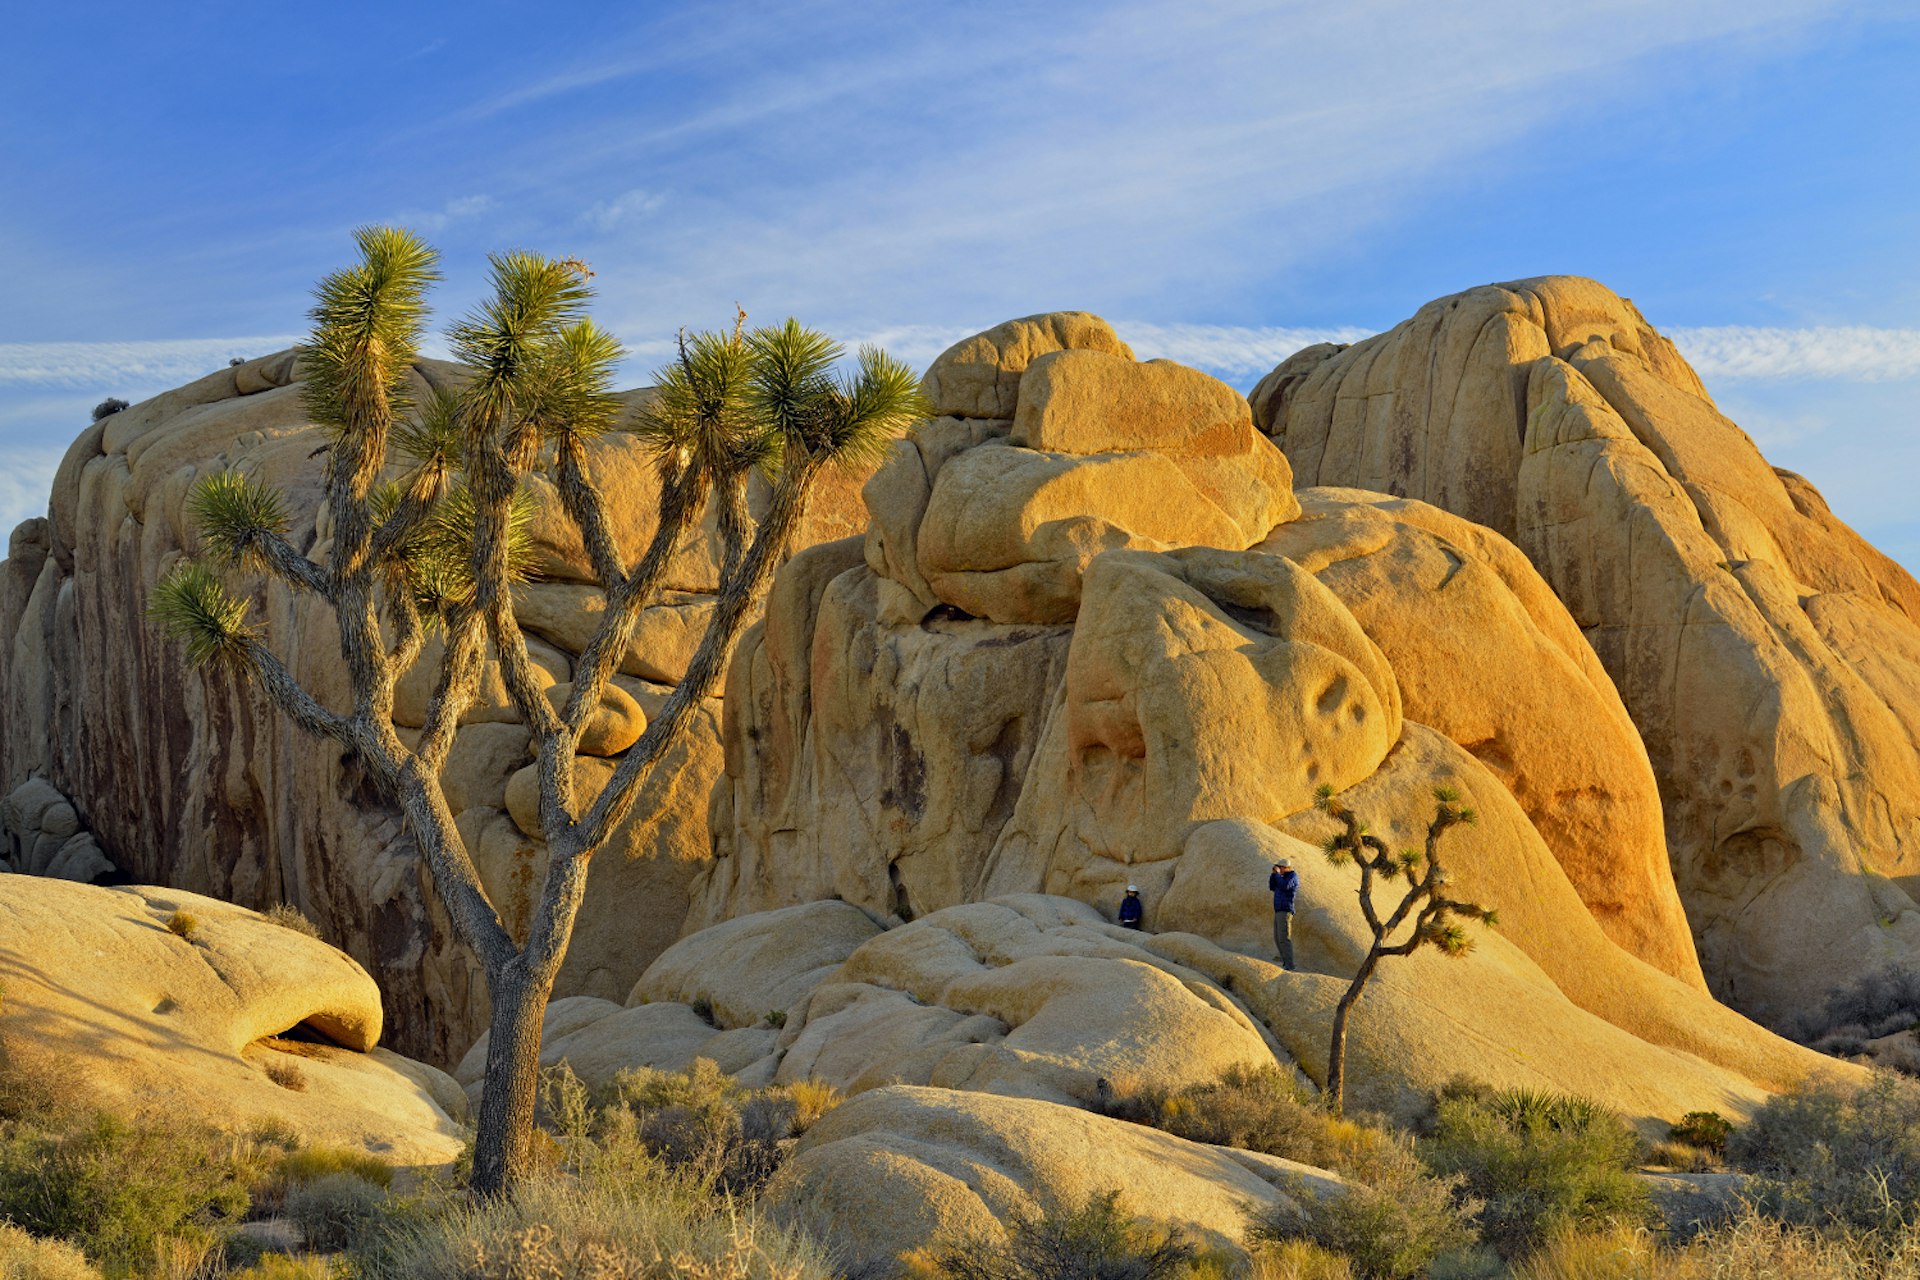 Mojave desert near sunset, featuring Joshua trees and white tank granite, Joshua Tree National Park, California, USA